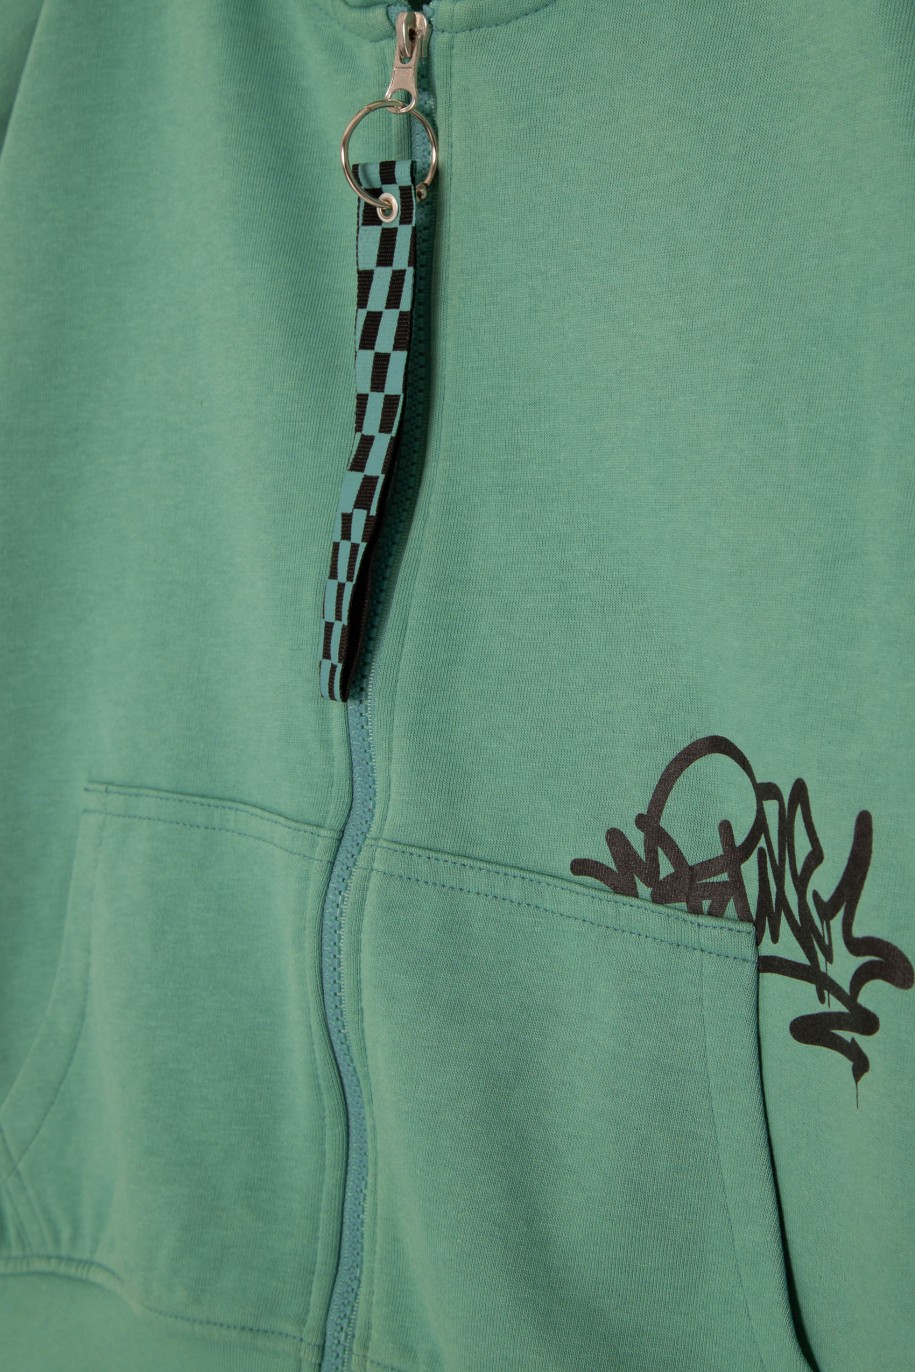 Zielona rozpinana bluza dresowa z nadrukiem graffiti - 44498